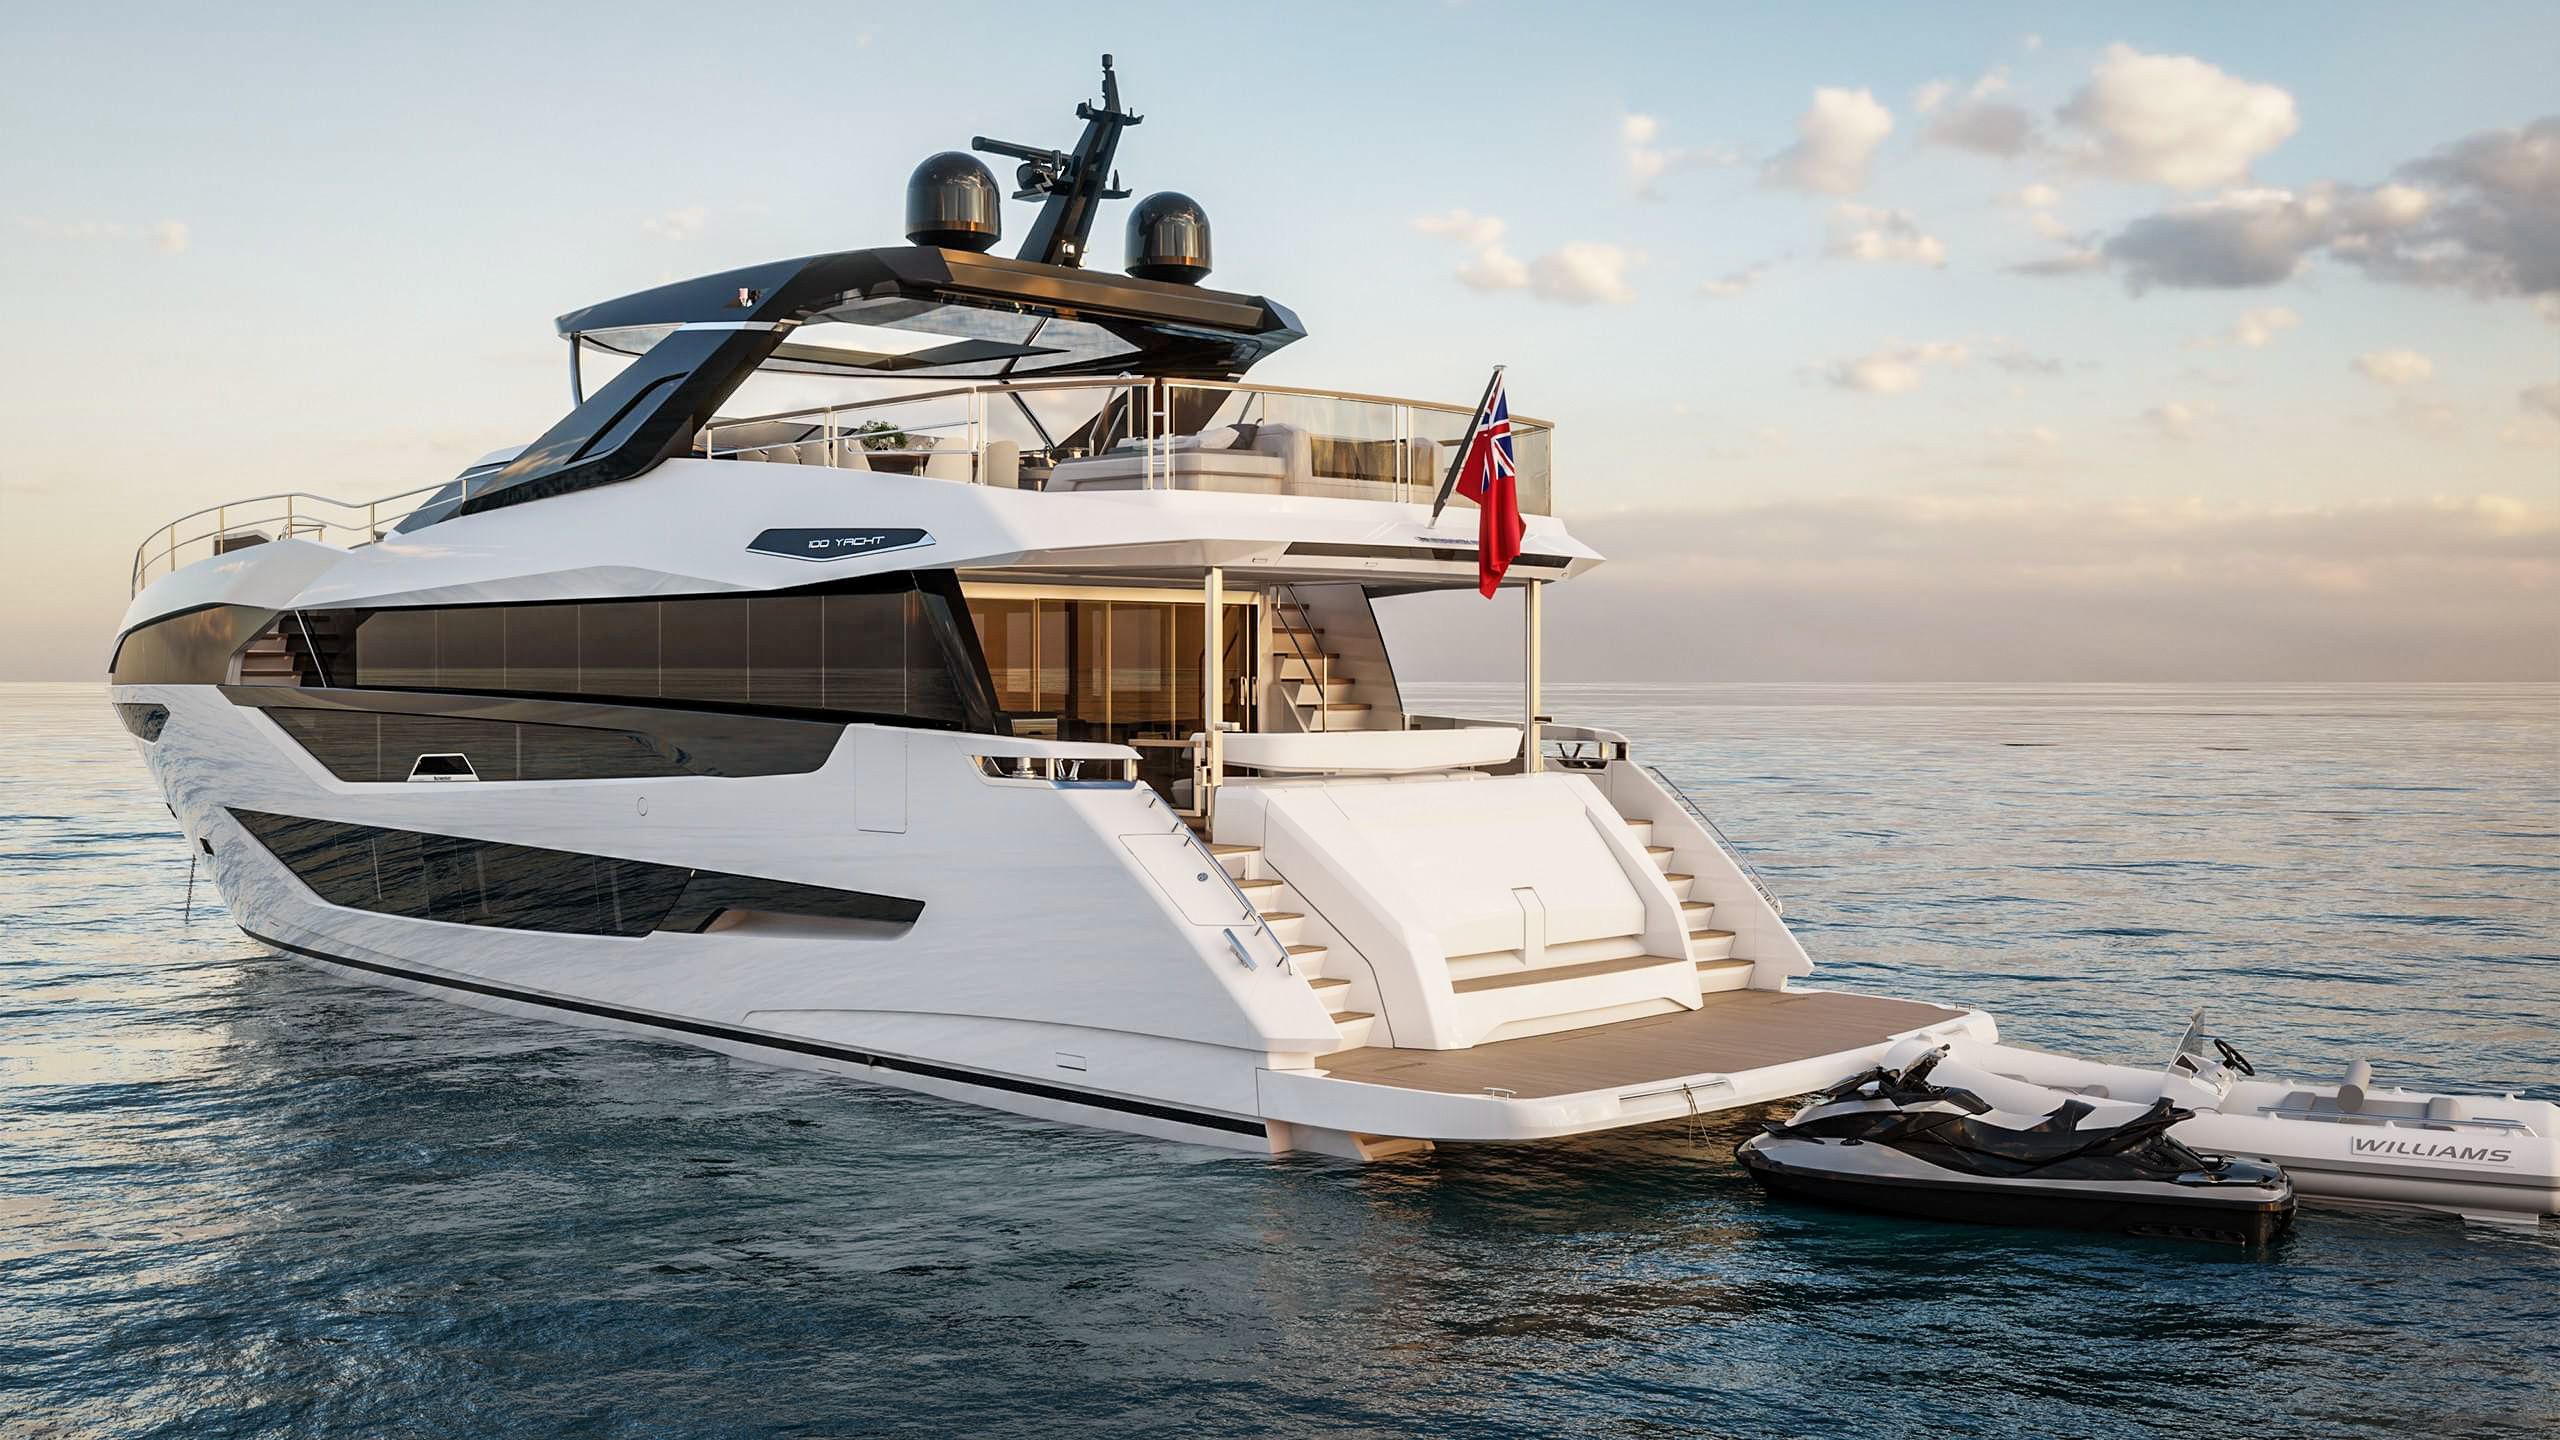 Yacht: Sunseeker, Used for pleasure trips on the water. 2560x1440 HD Wallpaper.